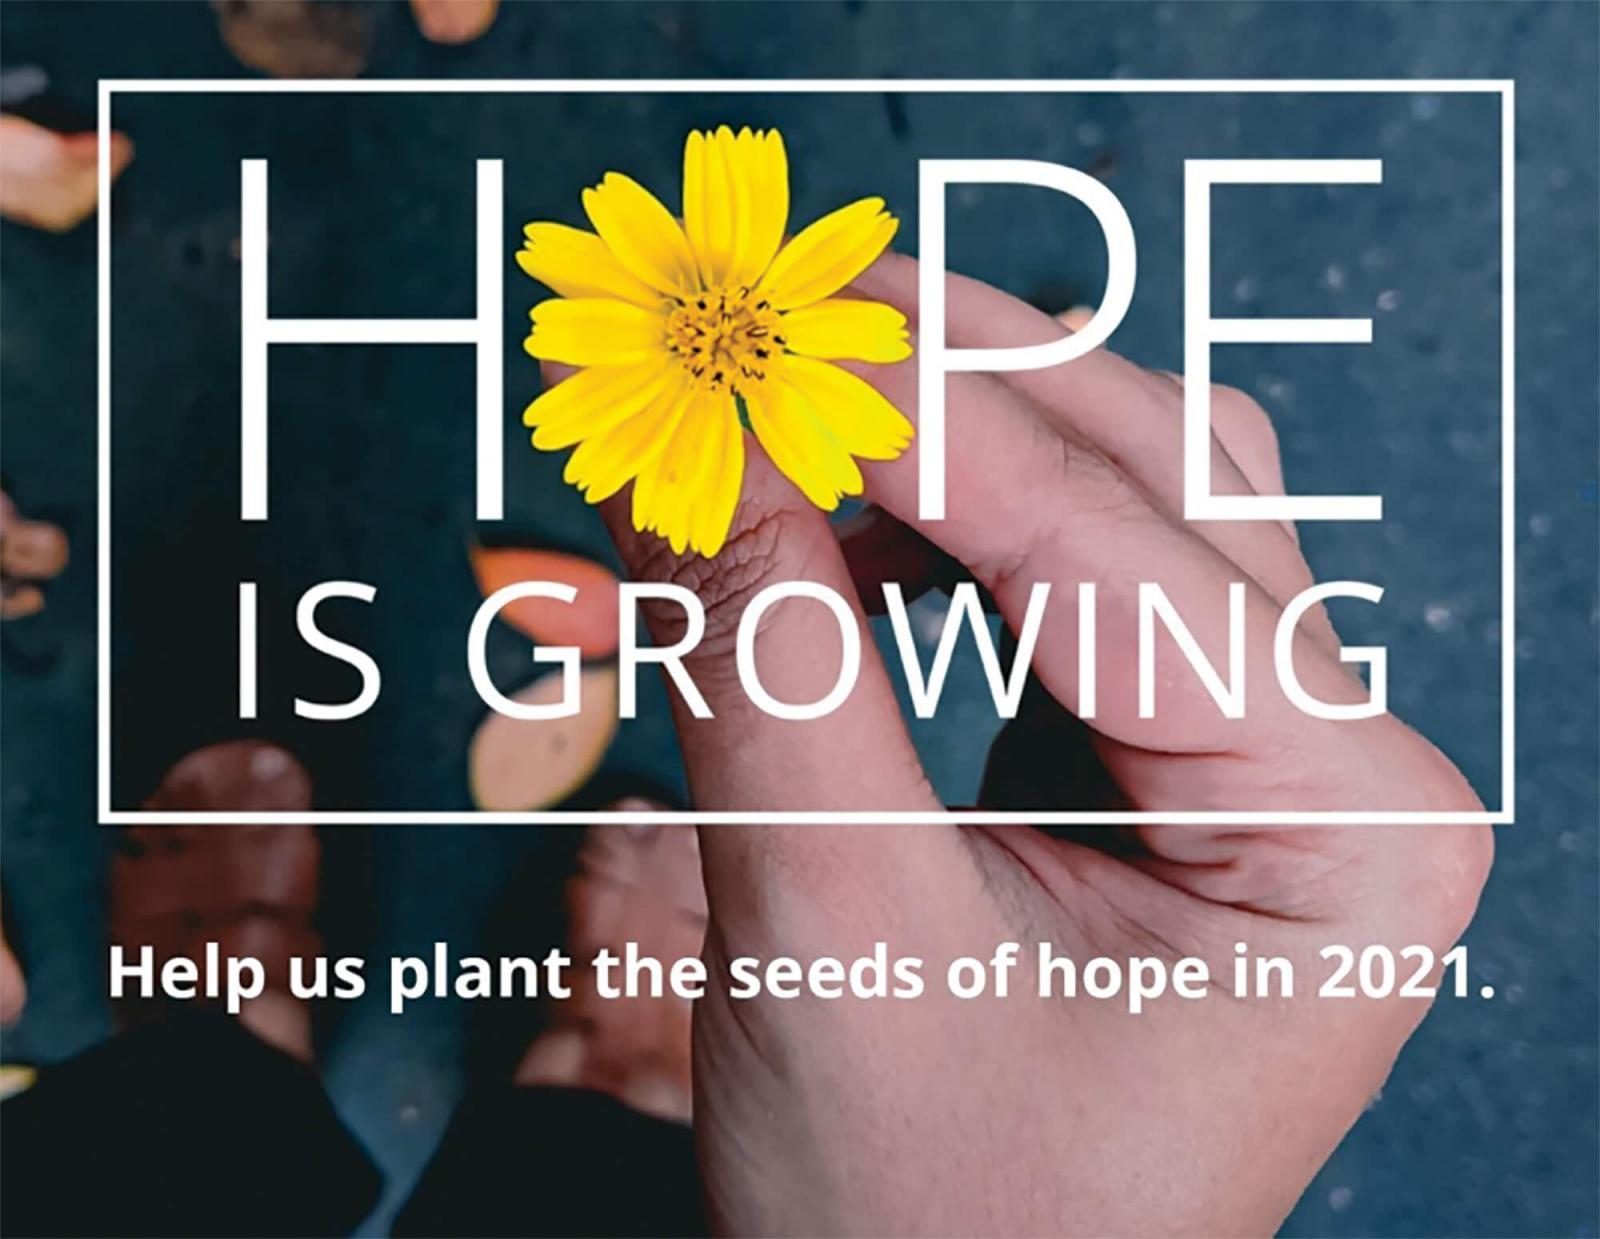 Planting hope from coast to coast